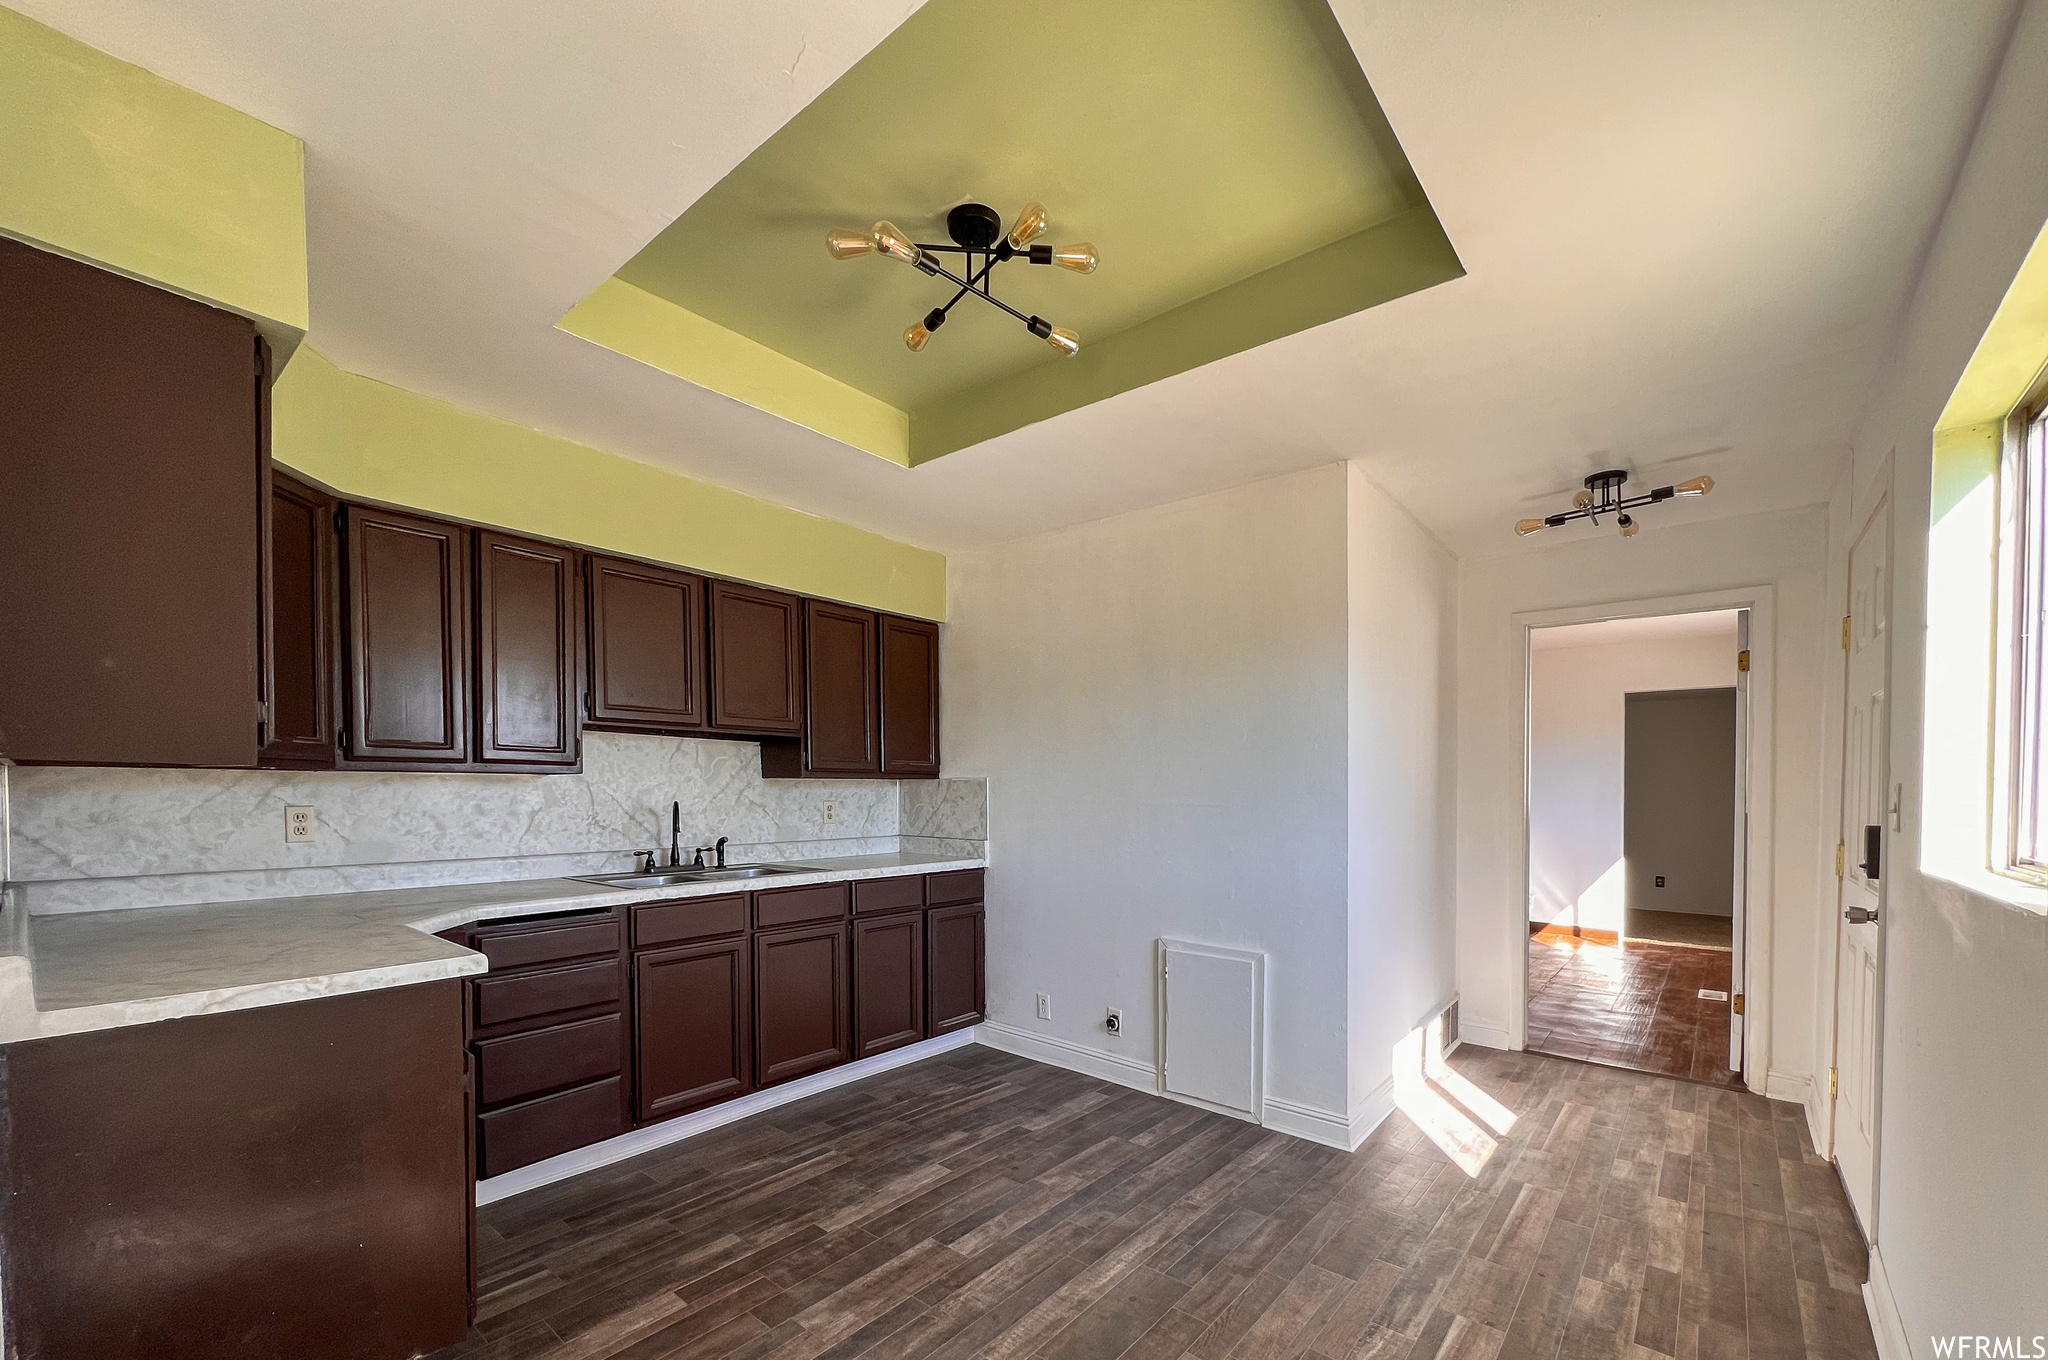 Kitchen with dark flooring, dark brown cabinets, and light countertops